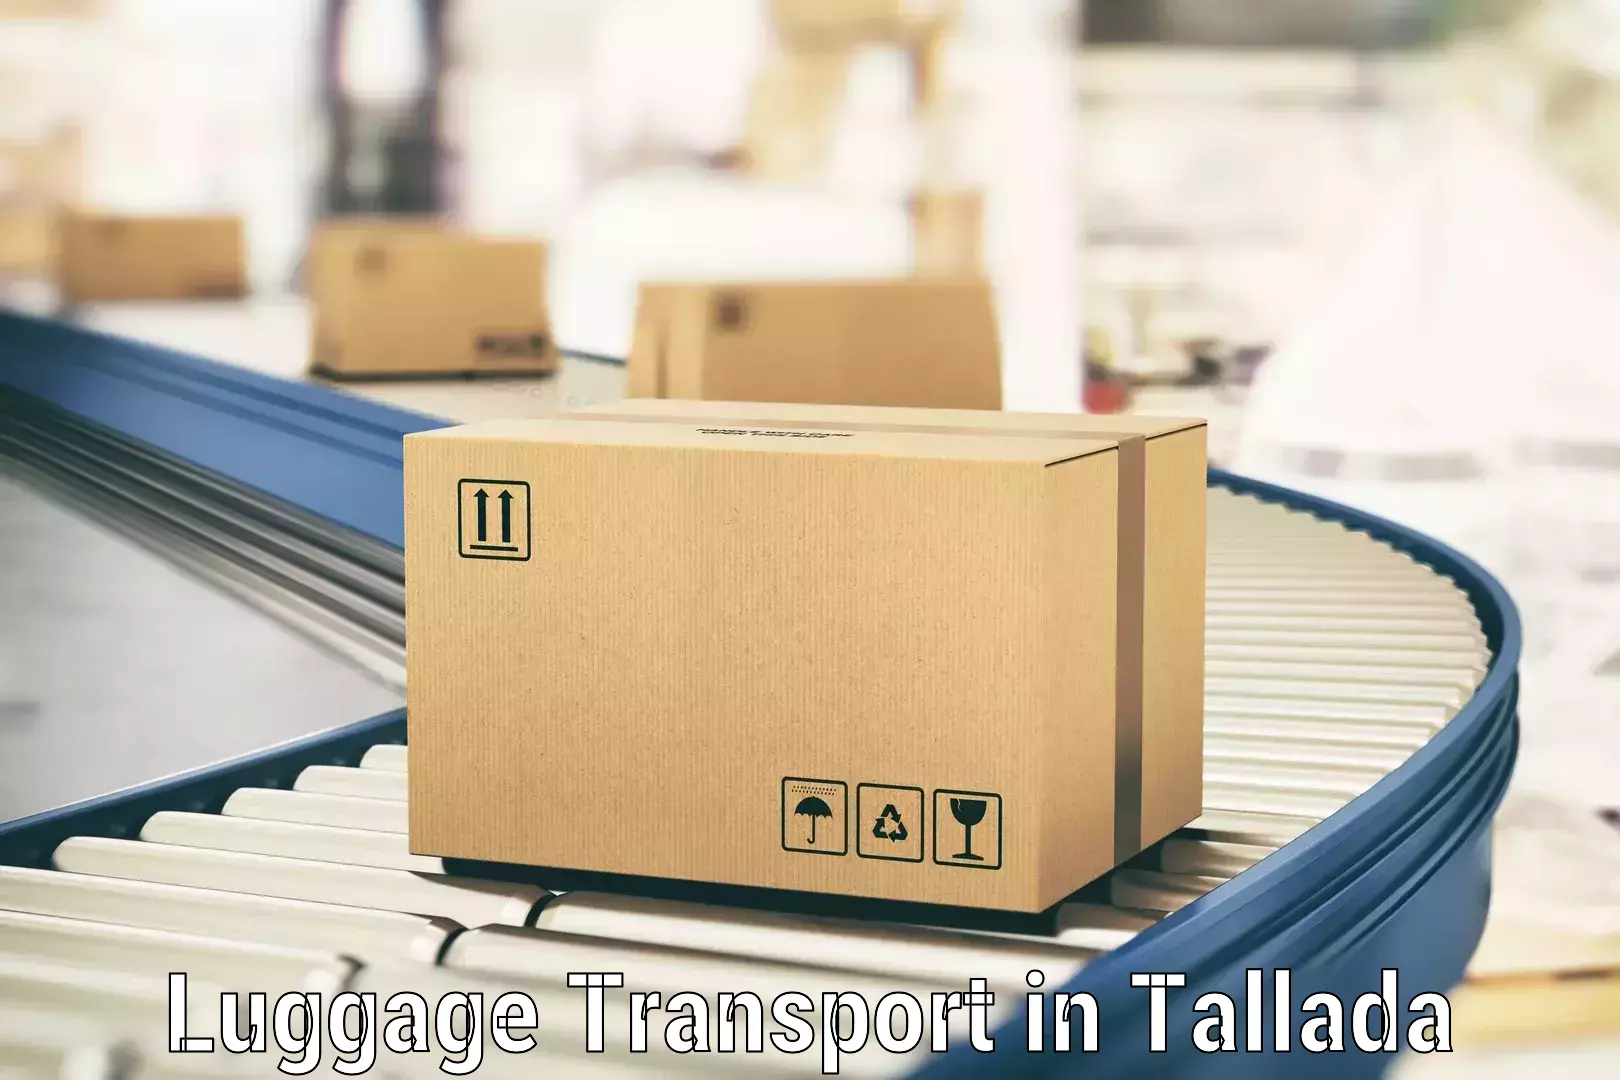 Luggage shipment specialists in Tallada